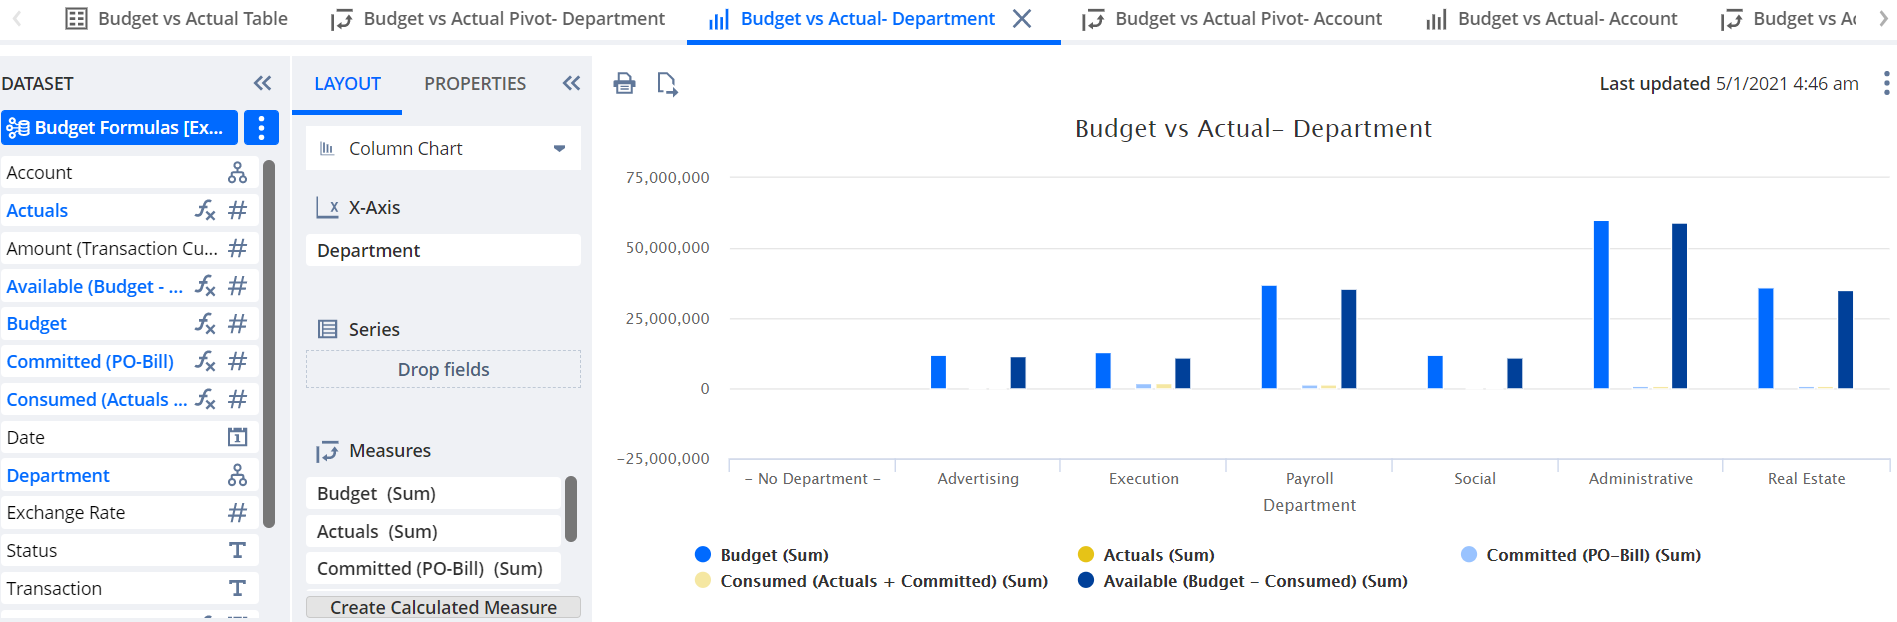 A Budget versus Actual worksheet sample by Department.